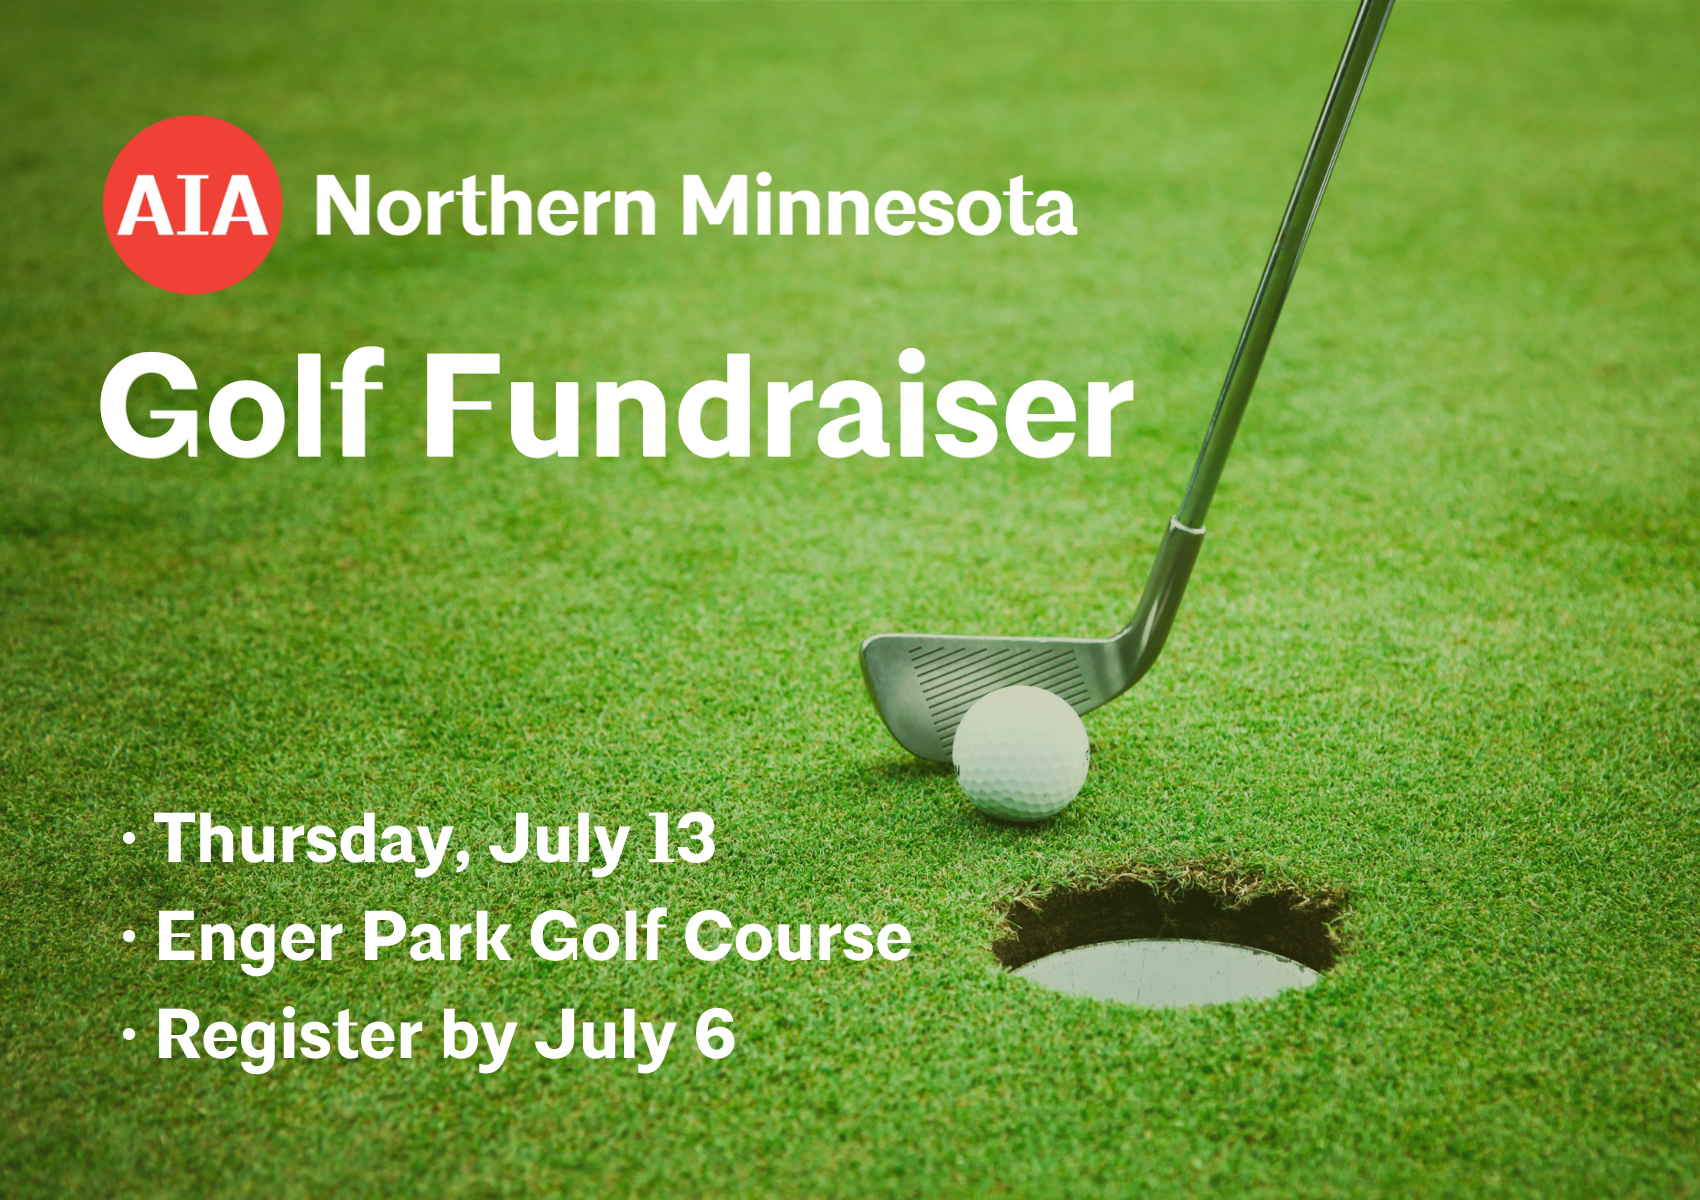 AIA Northern Minnesota Golf Fundraiser